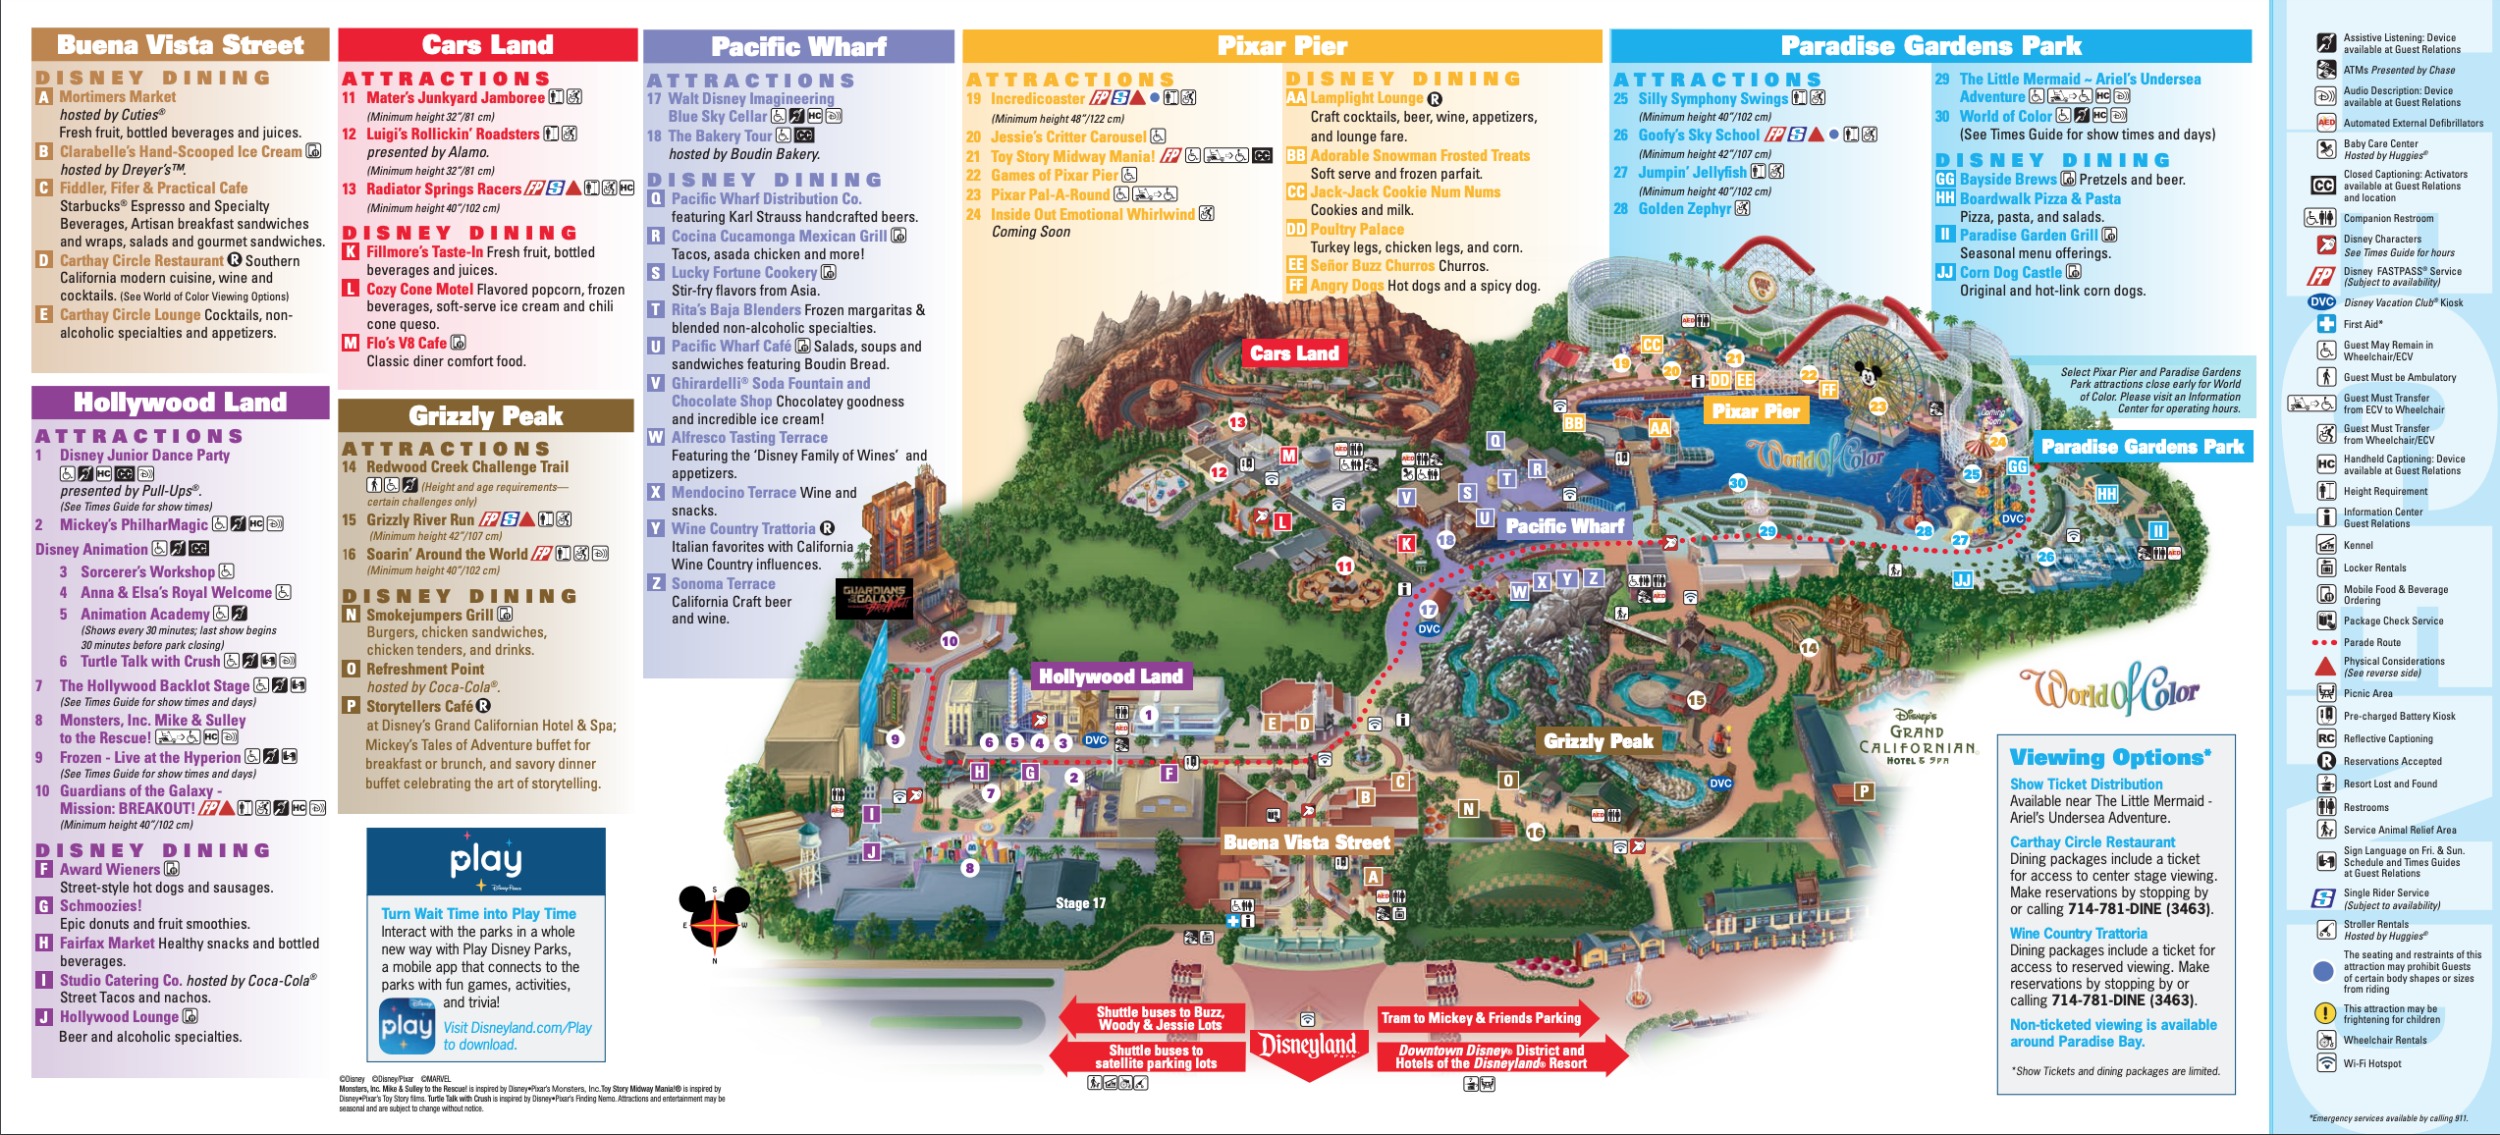 disneyland park map pdf Disneyland Park Map In California Map Of Disneyland disneyland park map pdf